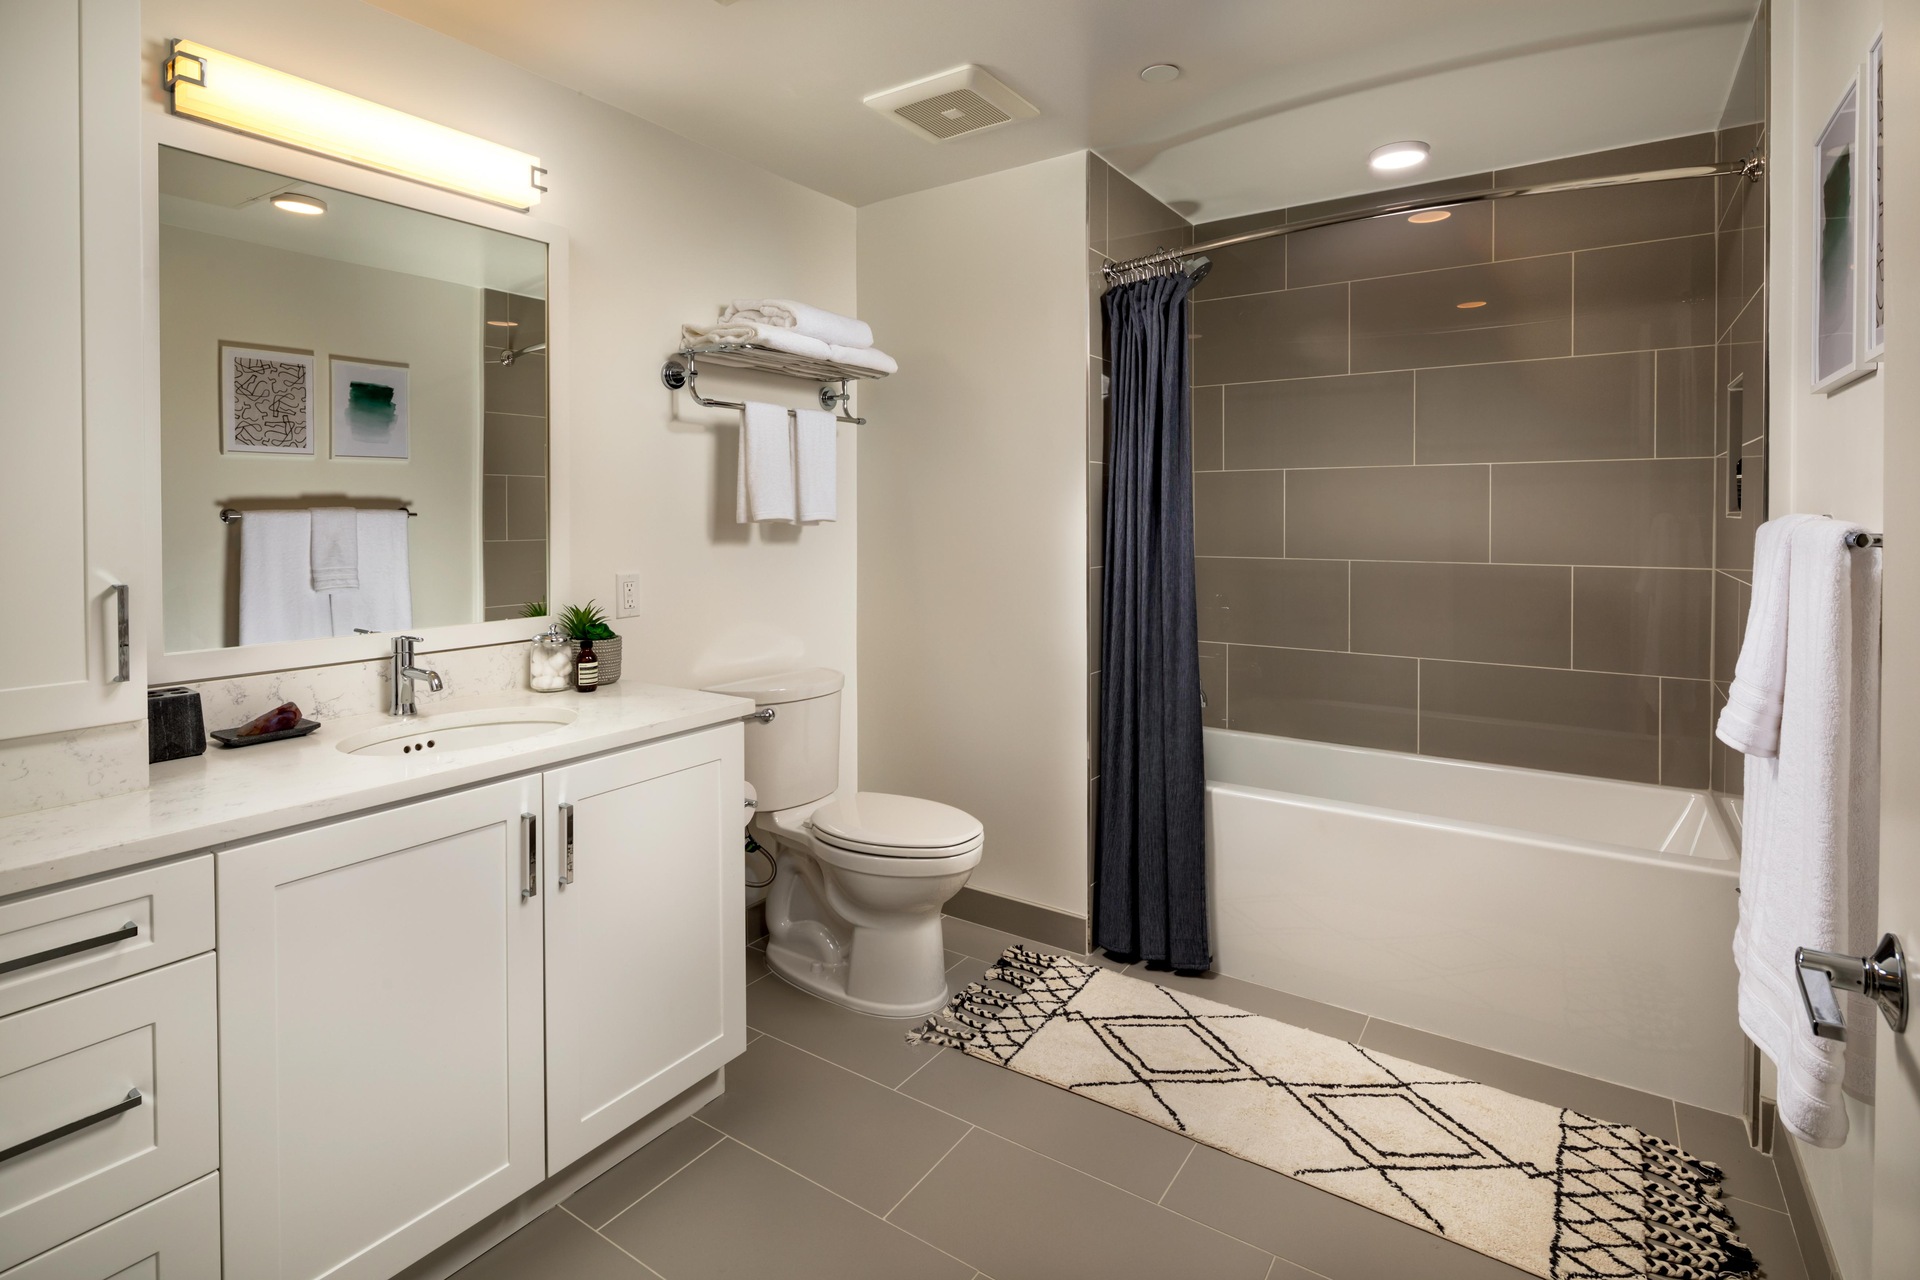 Bathroom with quartz countertops and porcelain tile